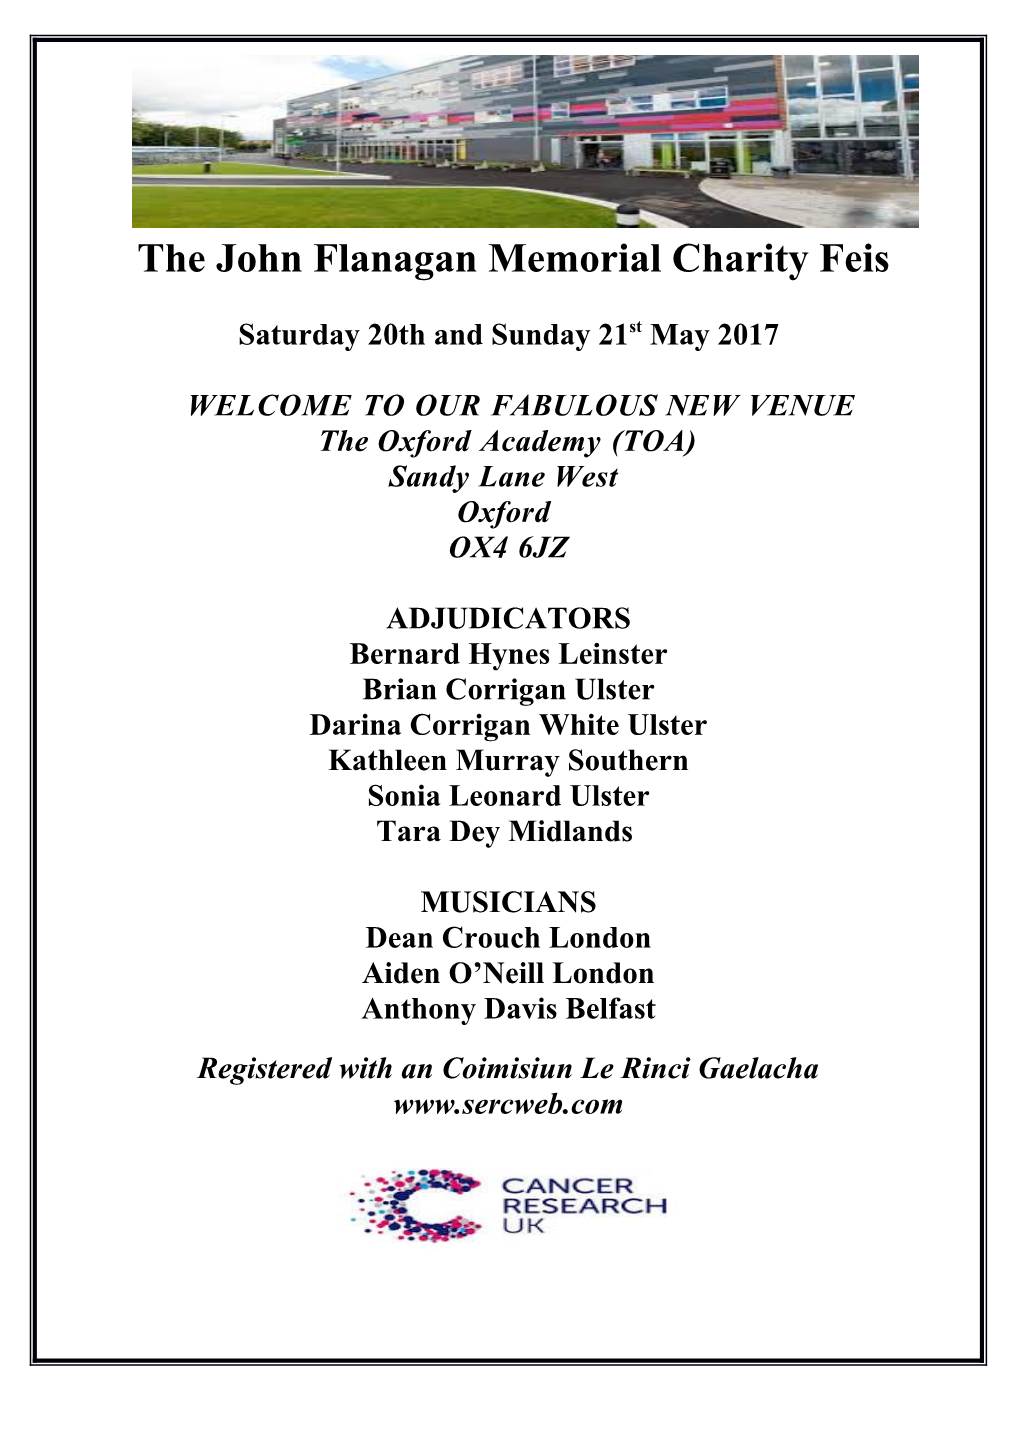 The John Flanagan Memorial Charity Feis